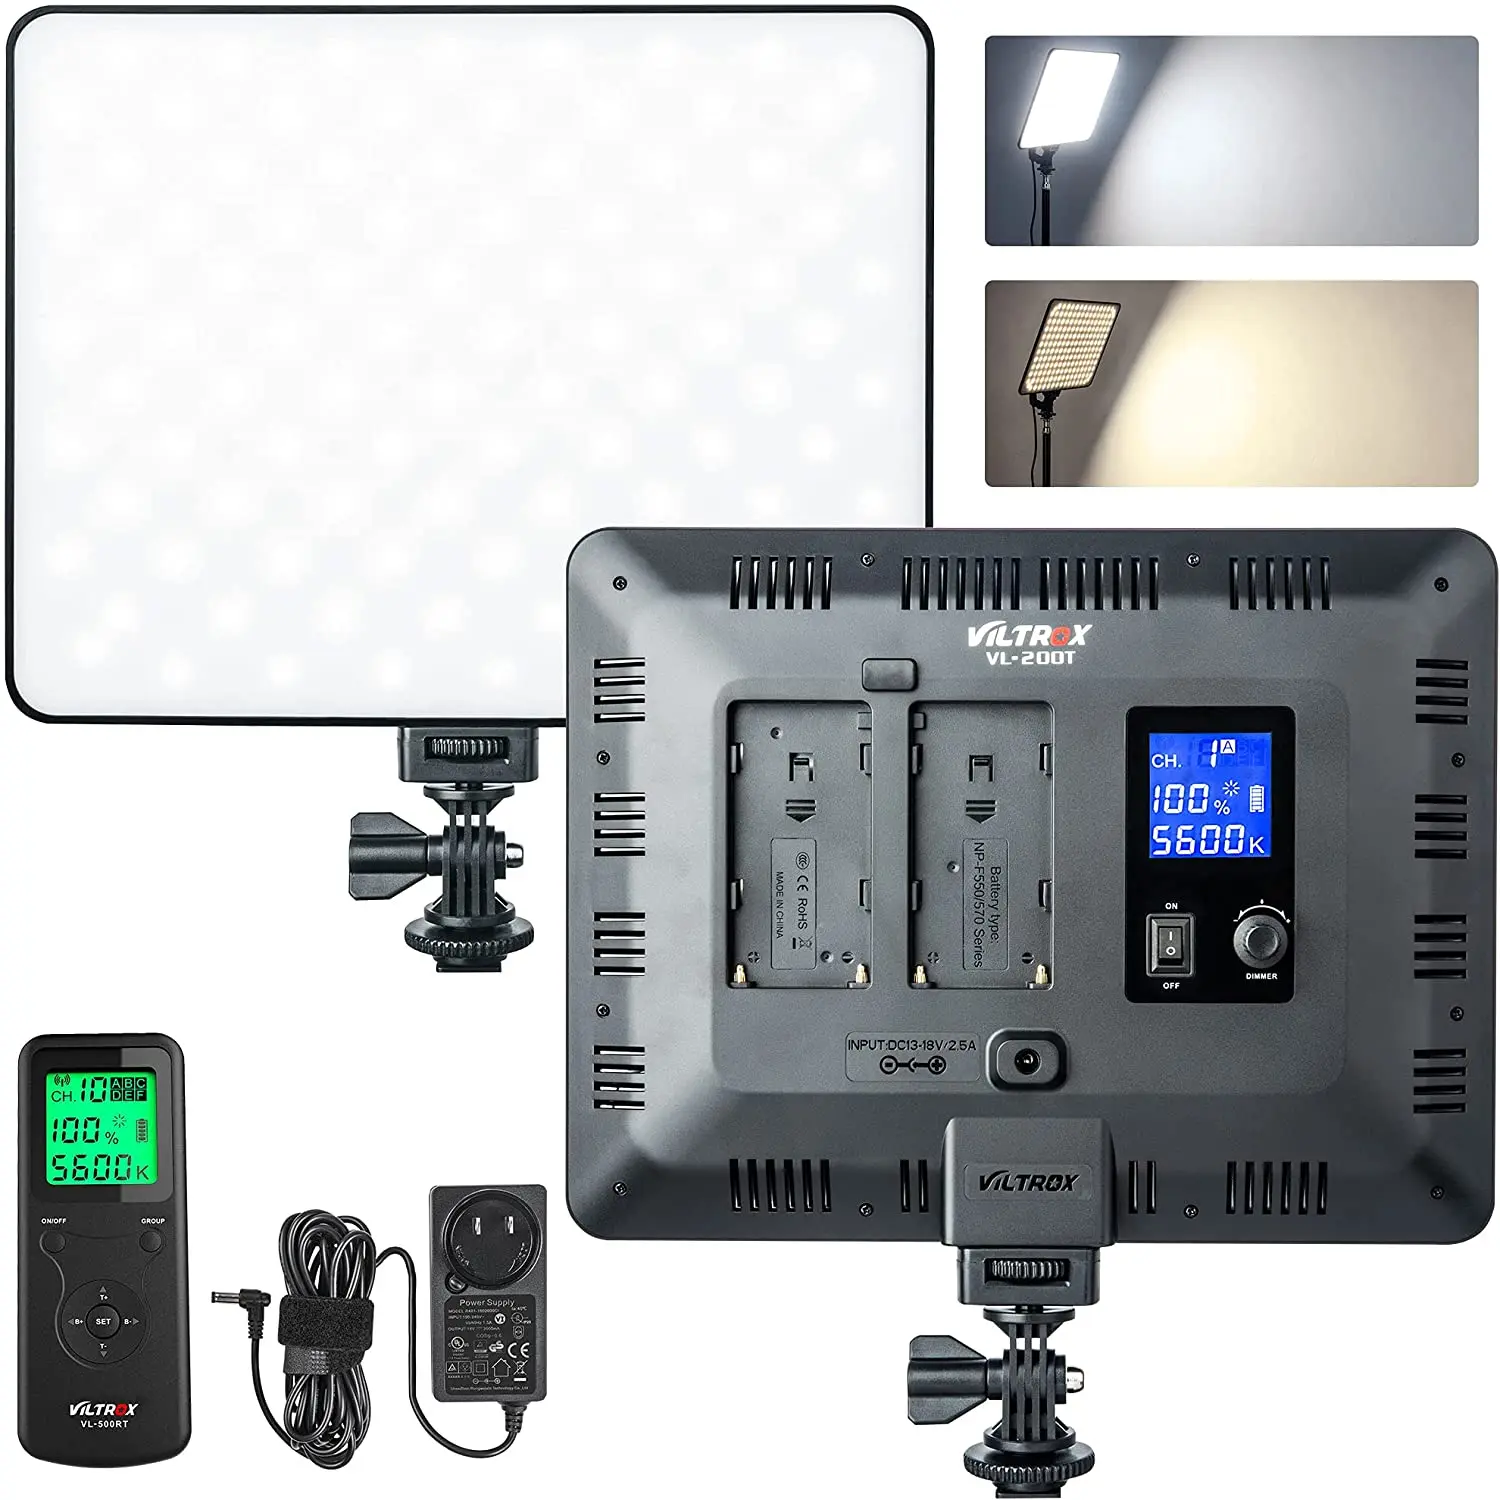 Viltrox VL-200T超薄型調整可能LEDビデオライトパネル,ライトパネル,3300k-5600k cri 95,リモコン付き